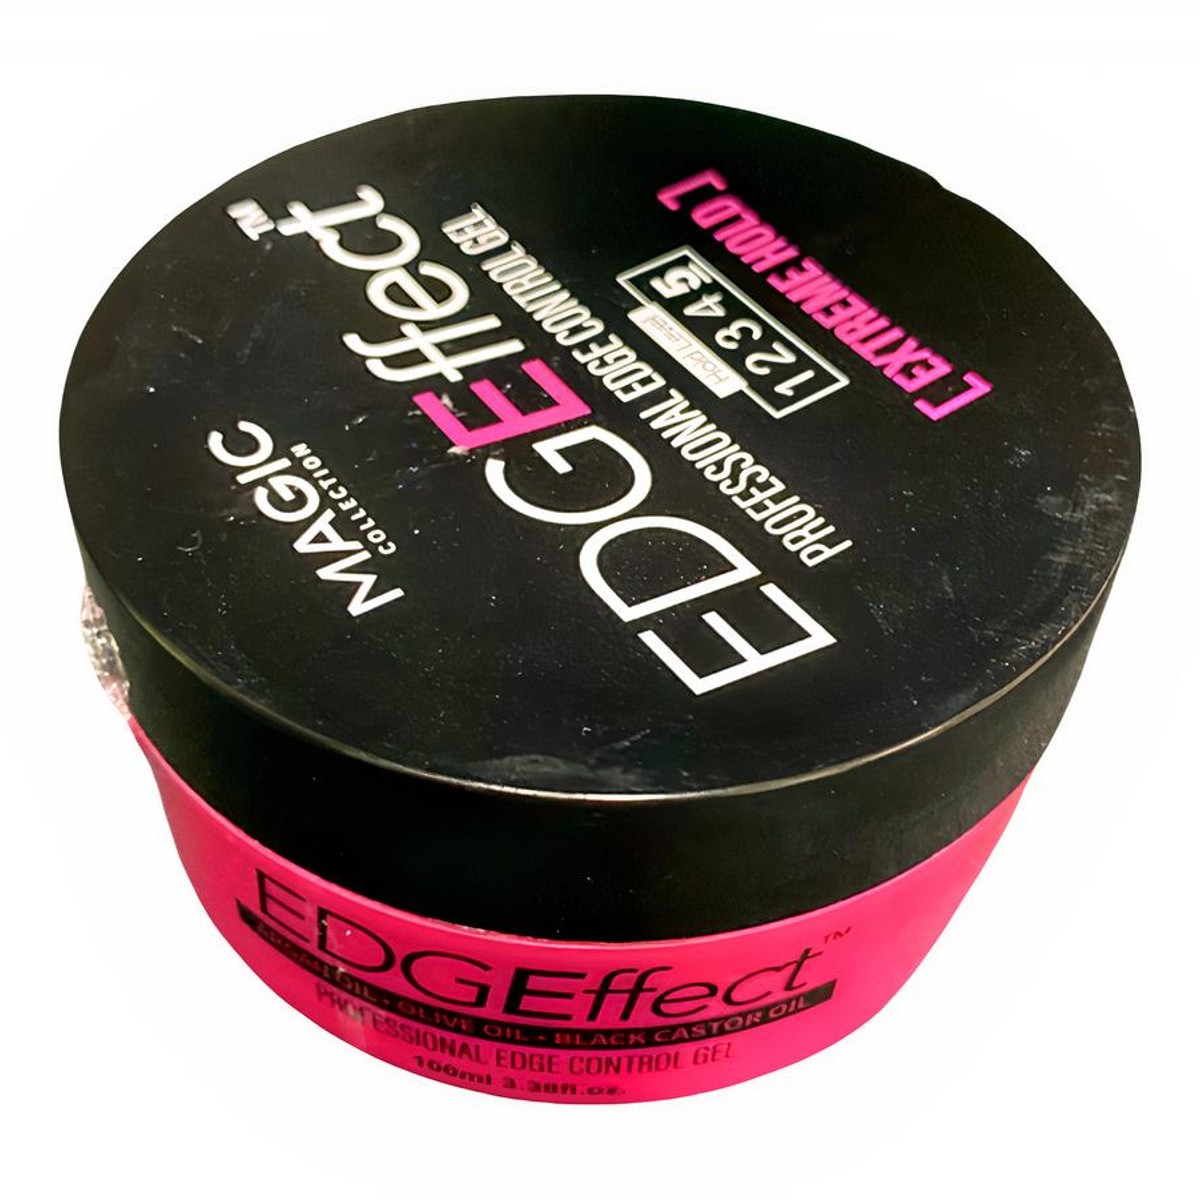 MAGIC - Edge Effect Professional Edge Control Gel Coconut Oil Extreme Hold  